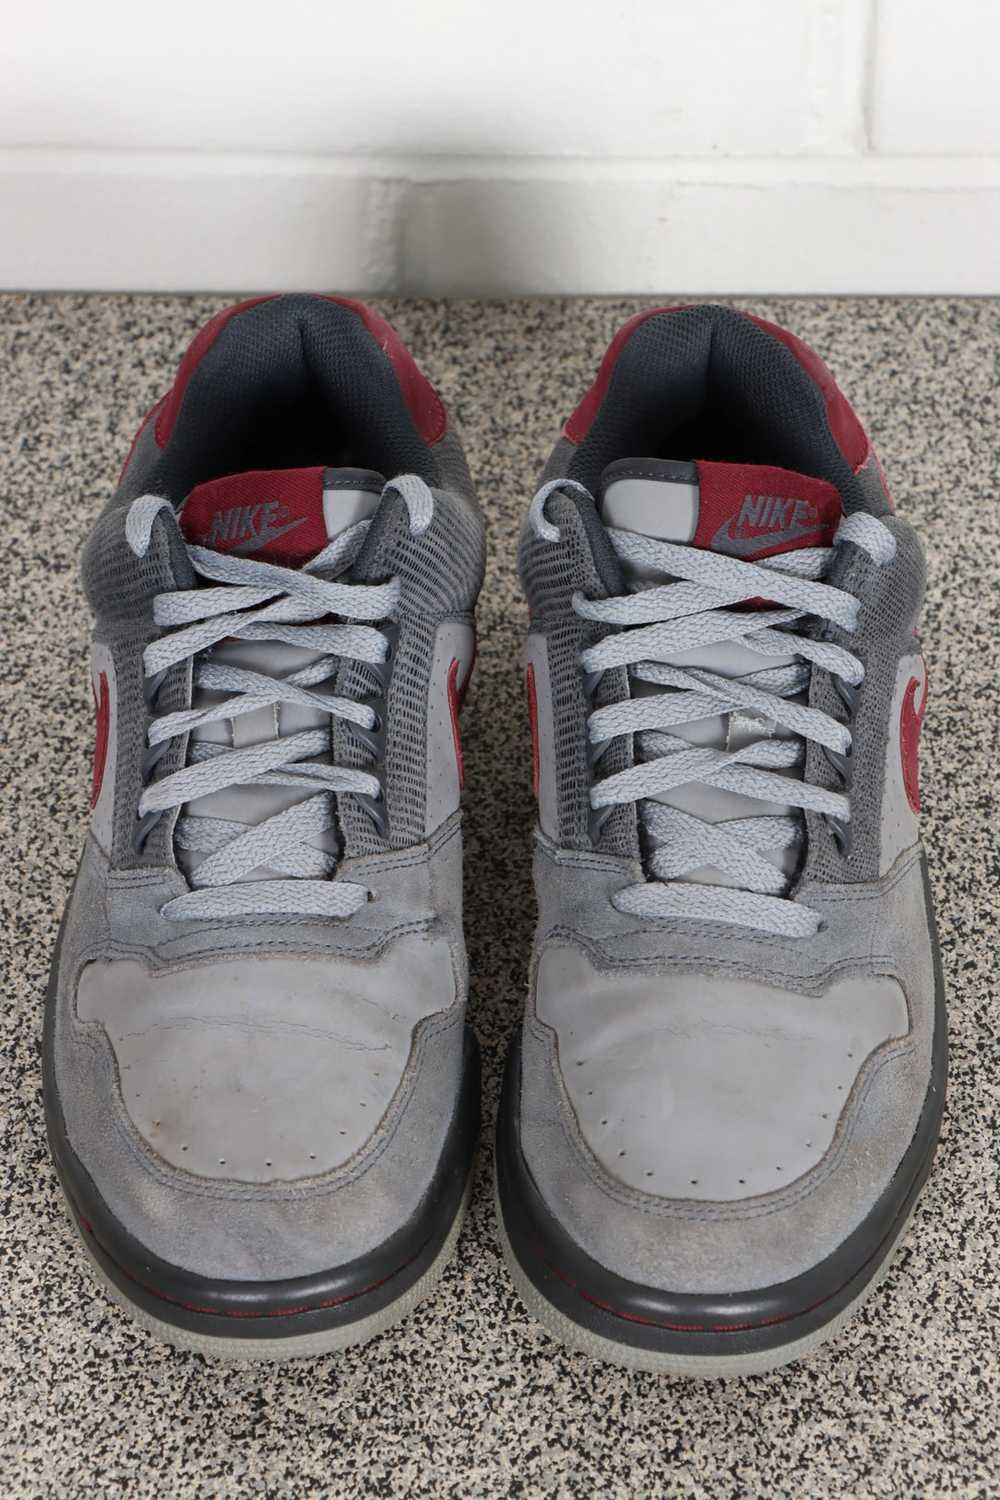 NIKE Delta Force Low Grey/Maroon Sneakers (8.5) - image 7